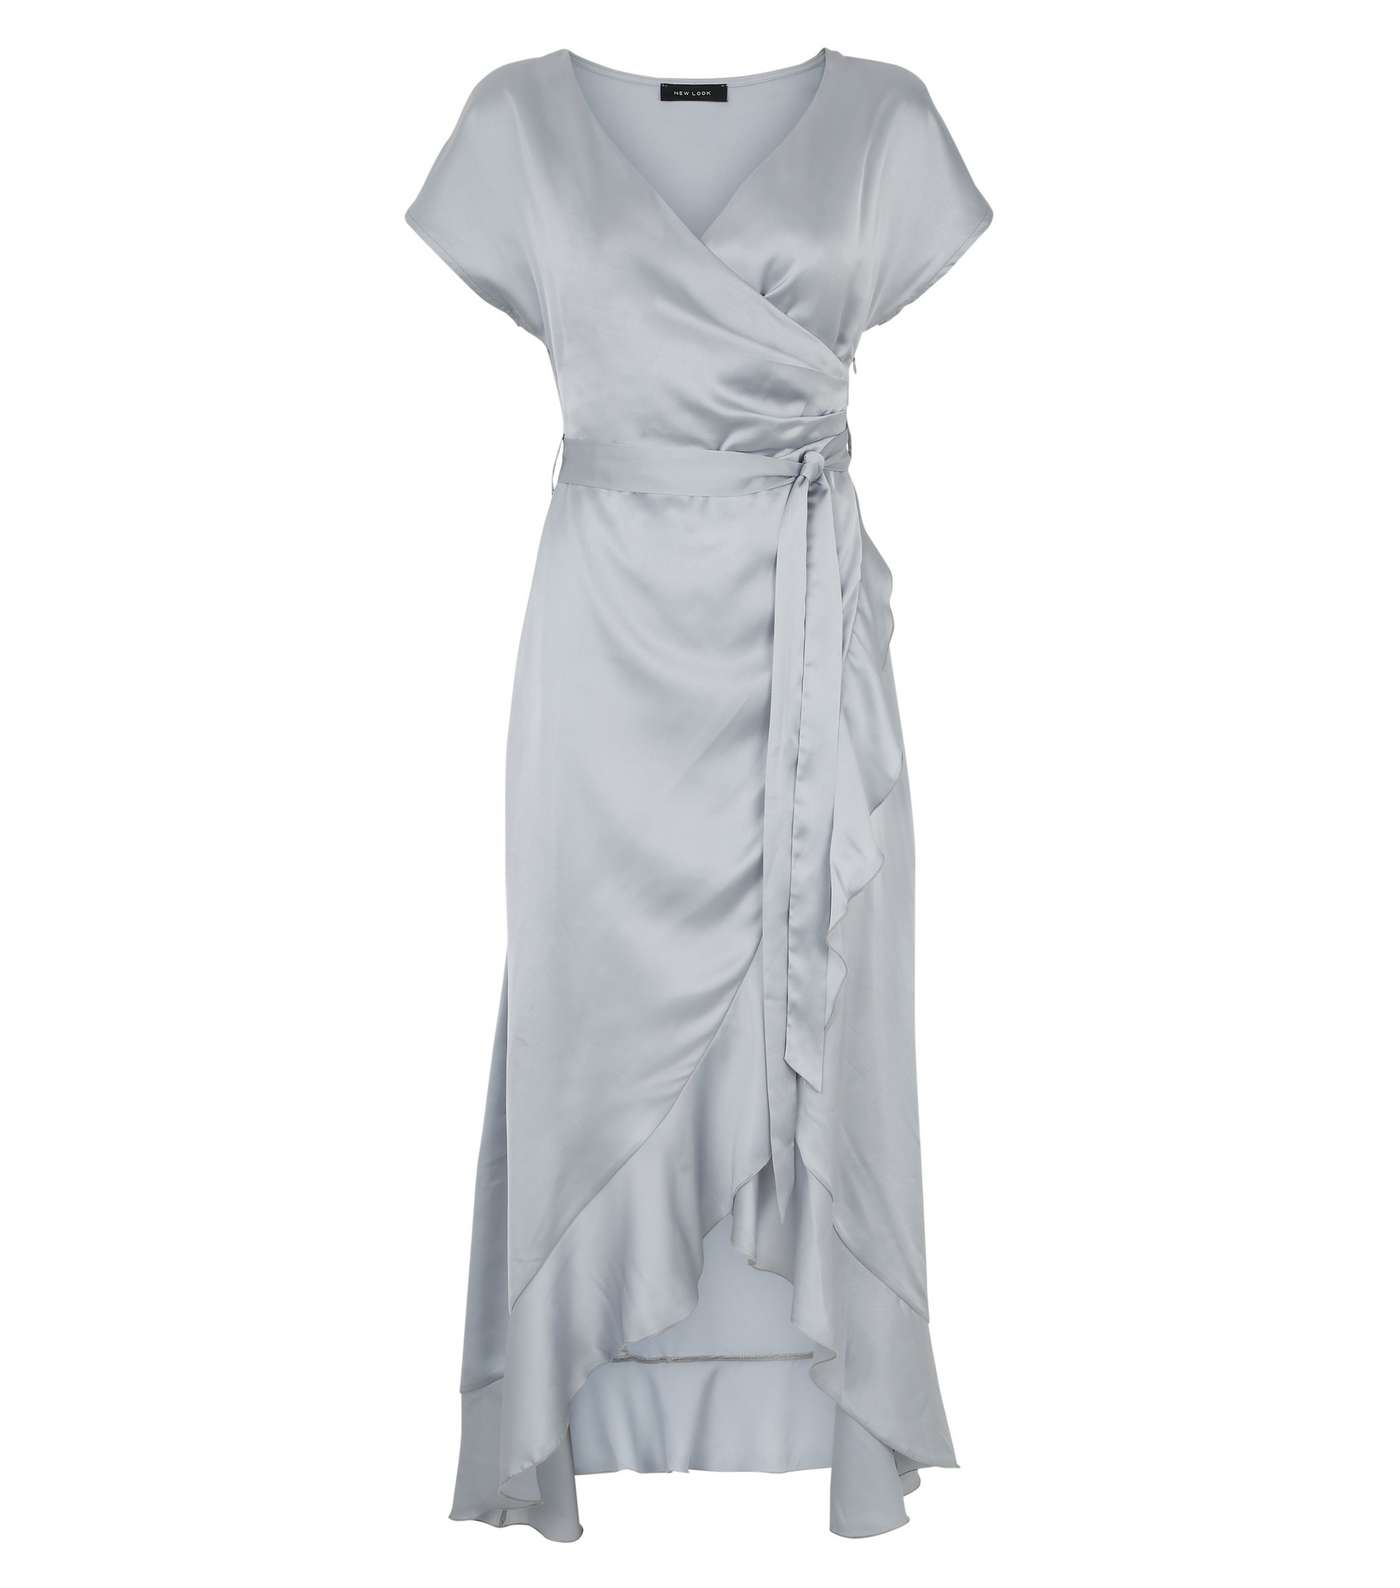 Pale Grey Satin Ruffle Trim Belted Midi Dress Image 4